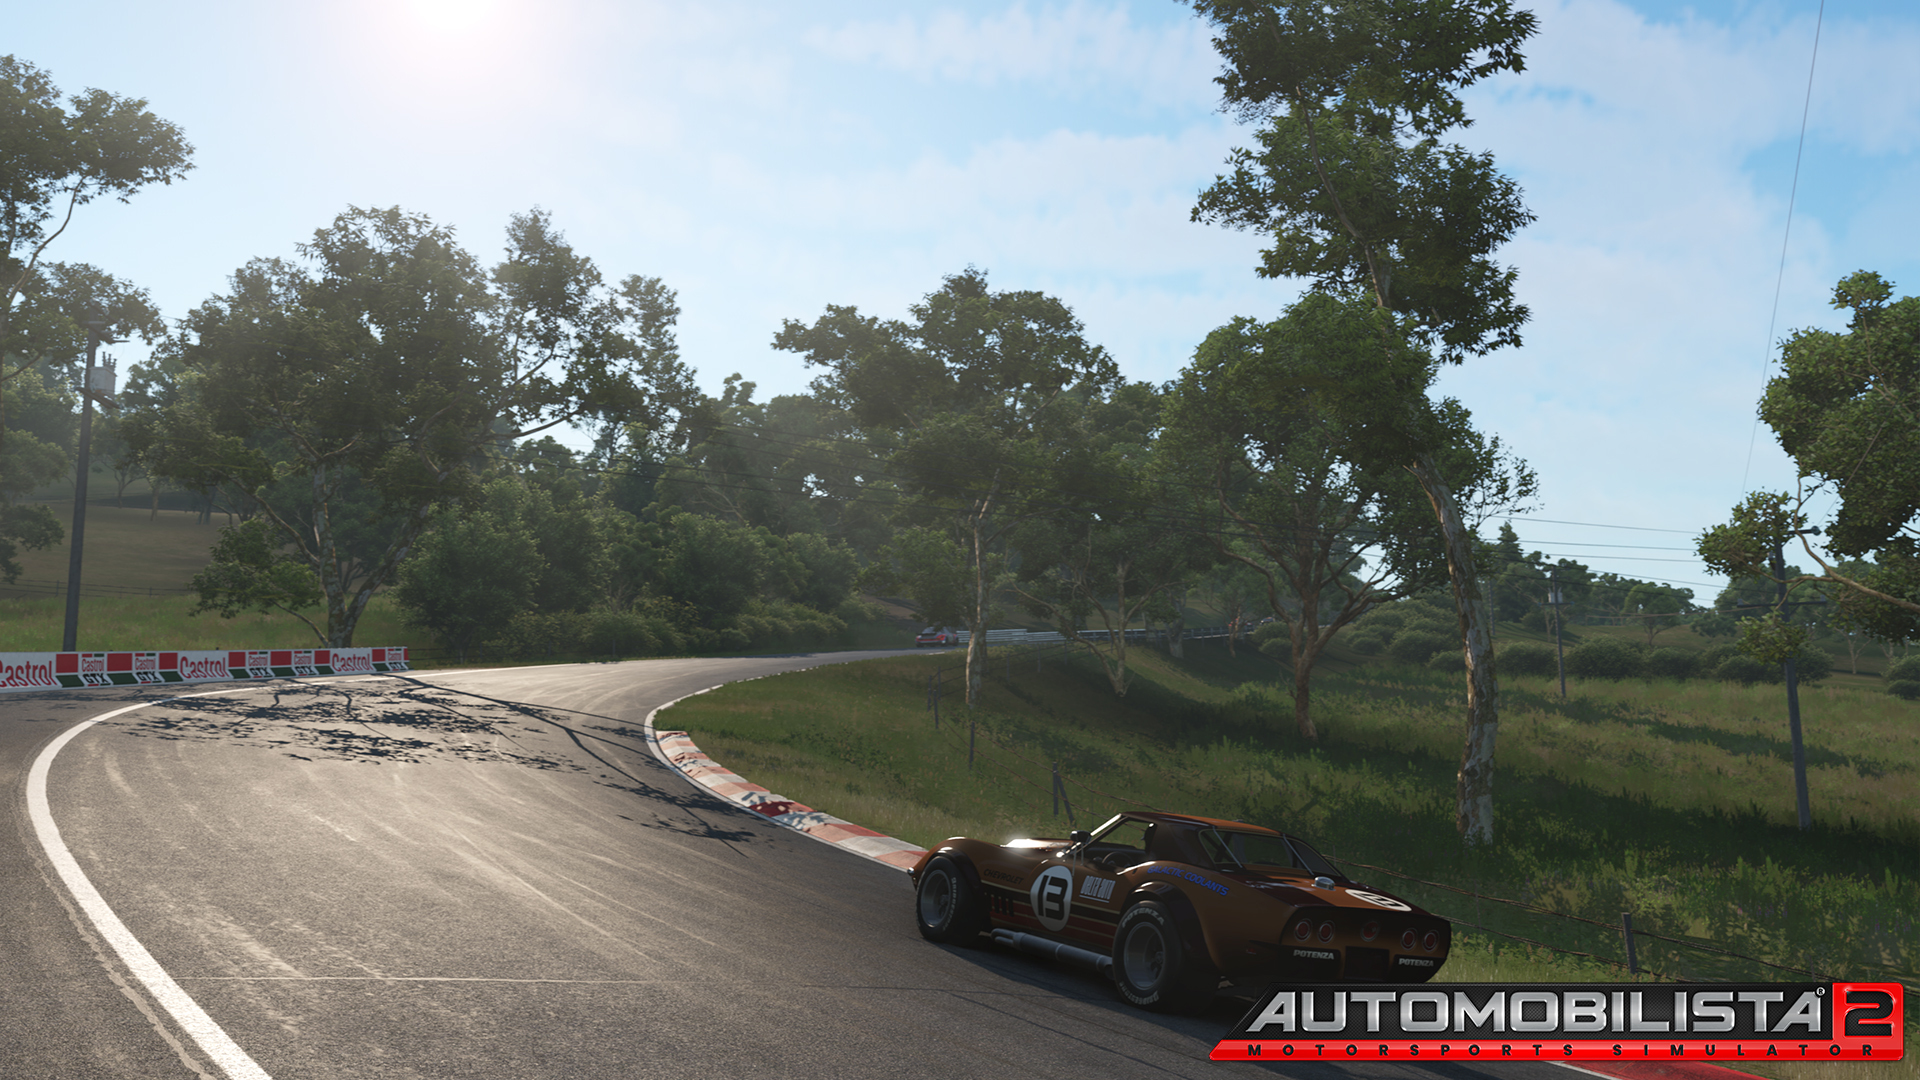 More information about "Automobilista 2: Development Update di Marzo"